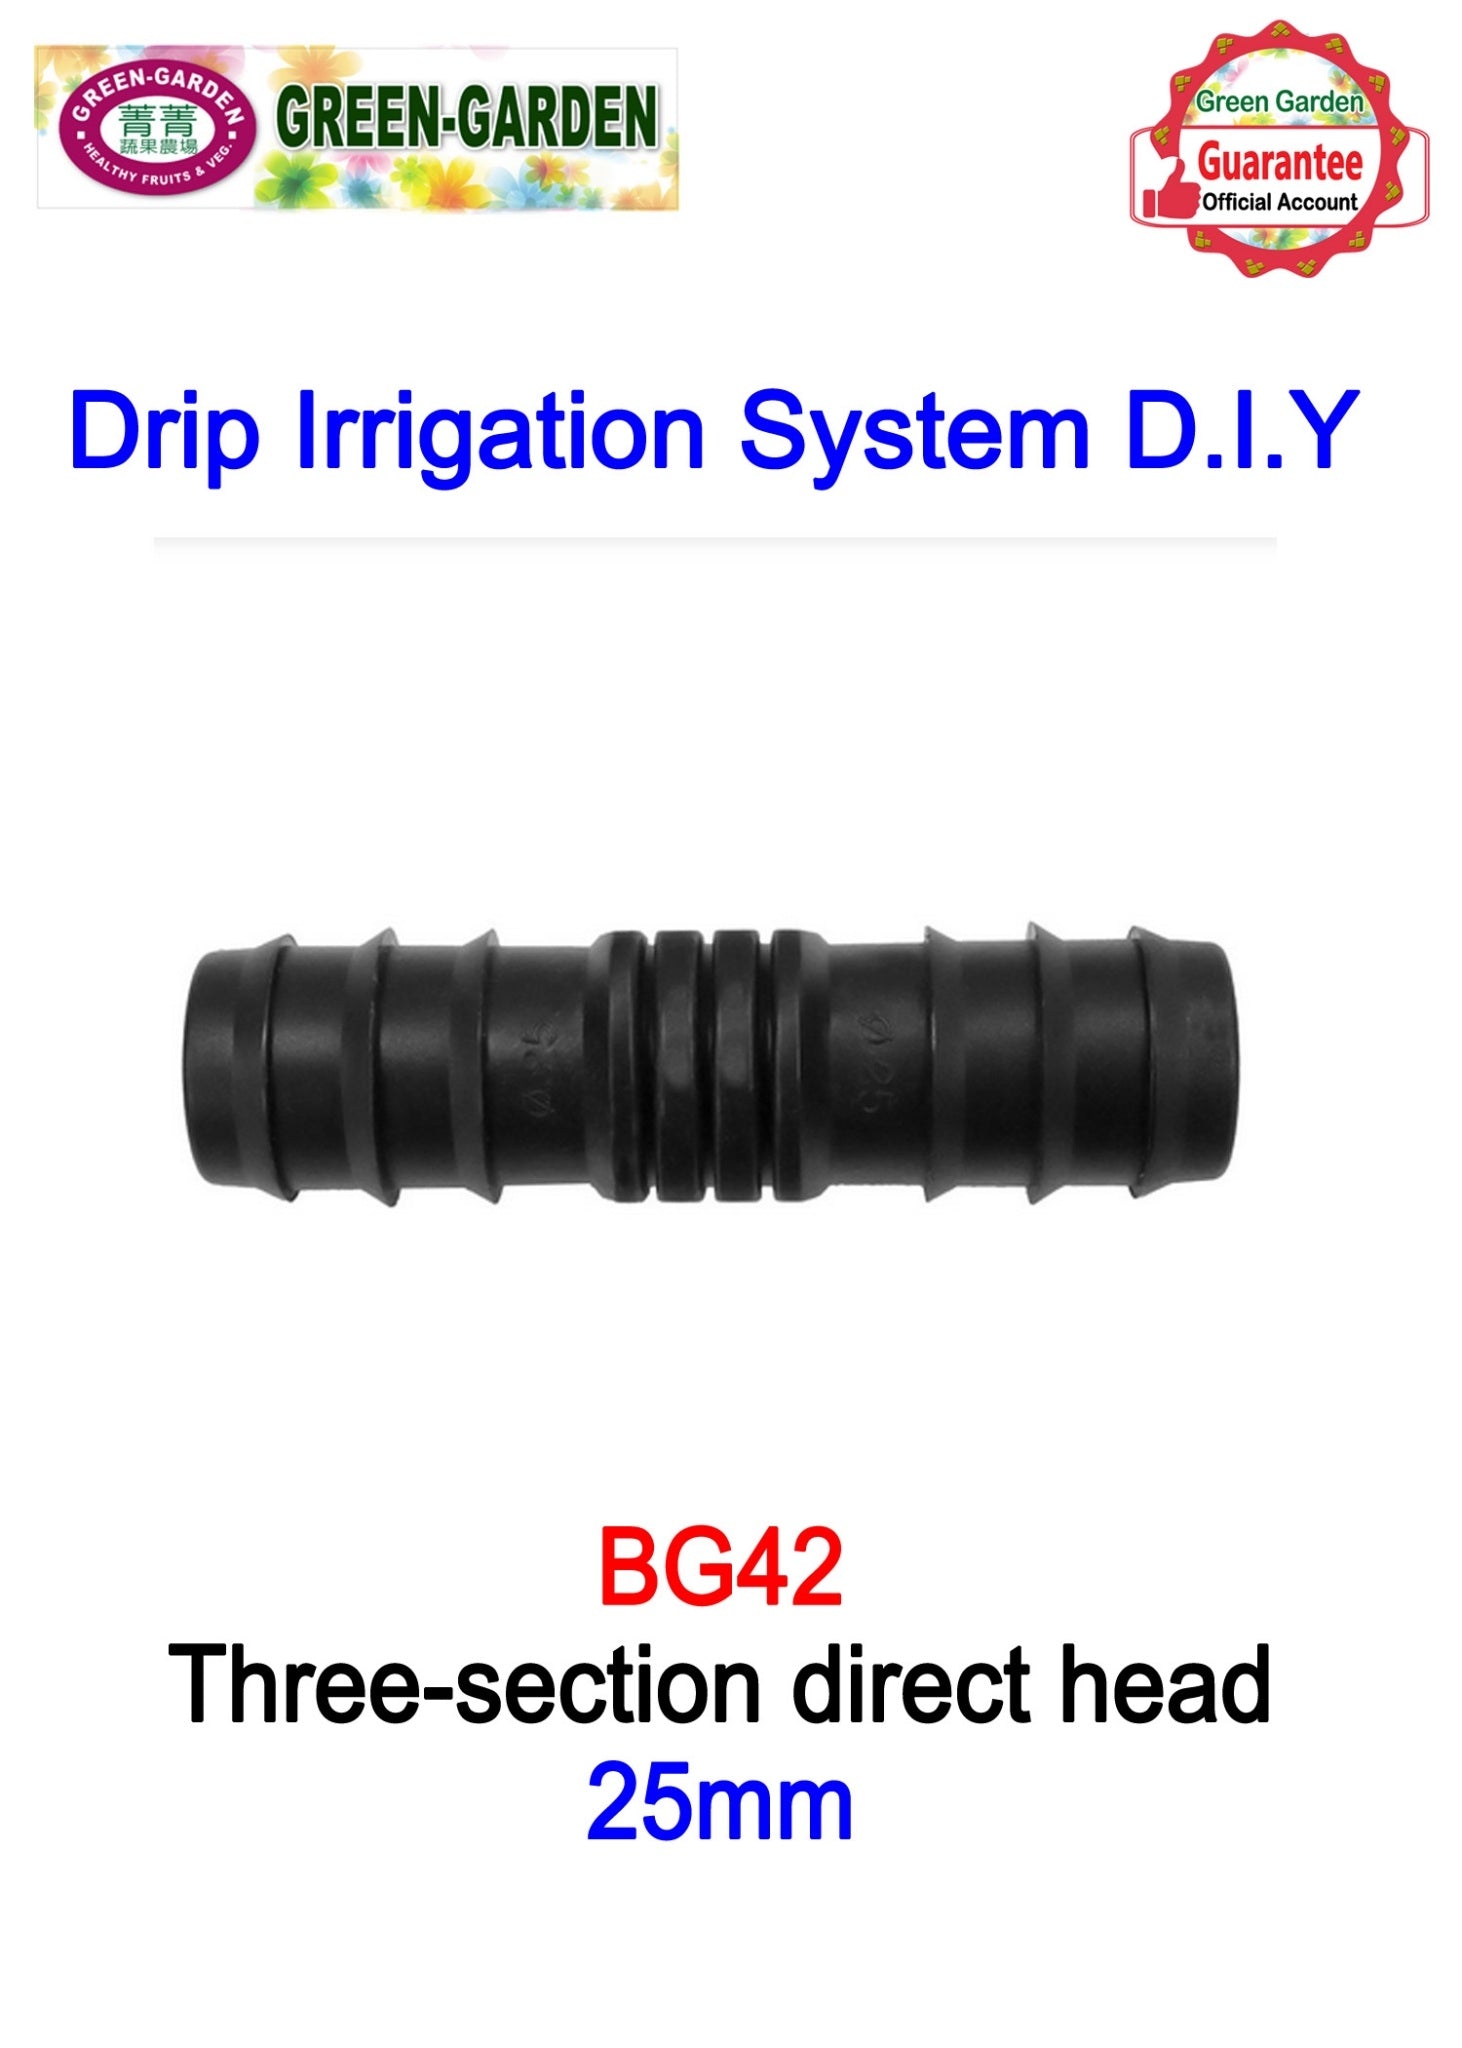 Drip Irrigation System - 25mm three-section straight connector BG42